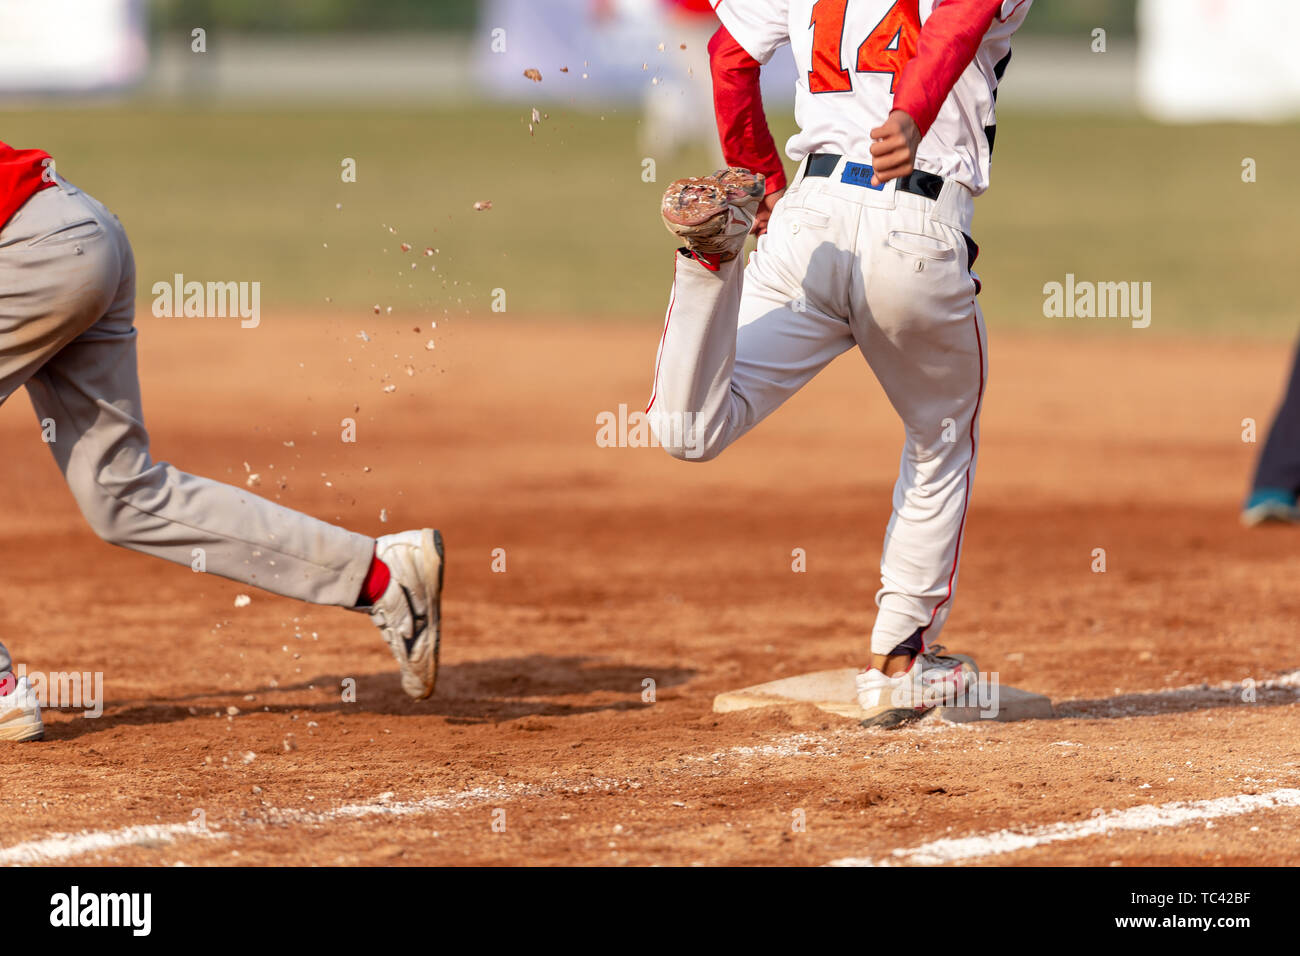 Sports and Junior Baseball Game Stock Photo